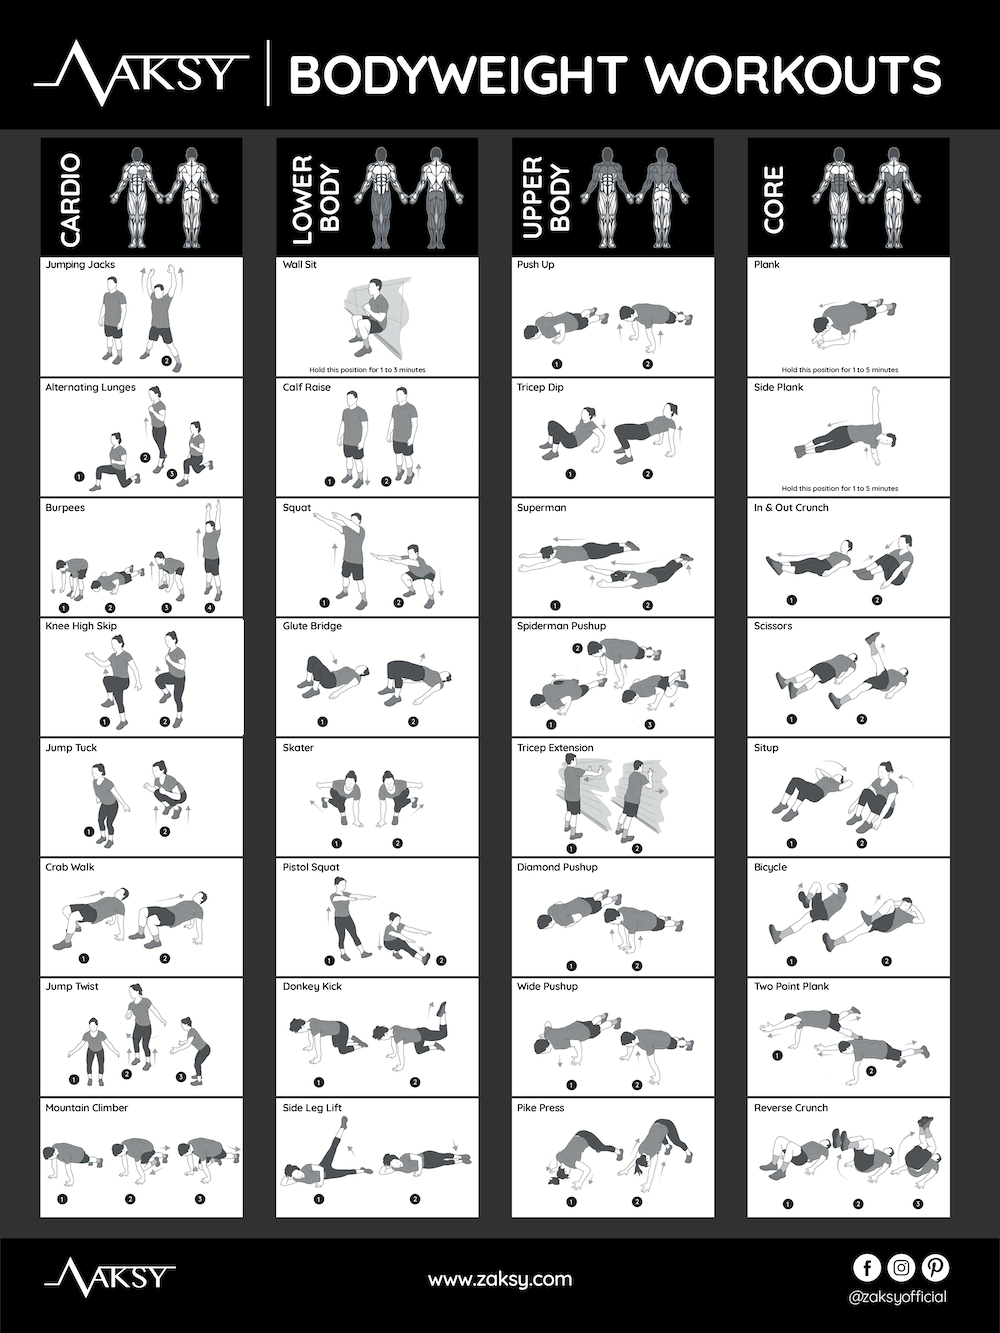 Bodyweight Workouts Poster by Zaksy - Bodyweight Workouts Poster by Zaksy -   19 fitness Equipment plan ideas